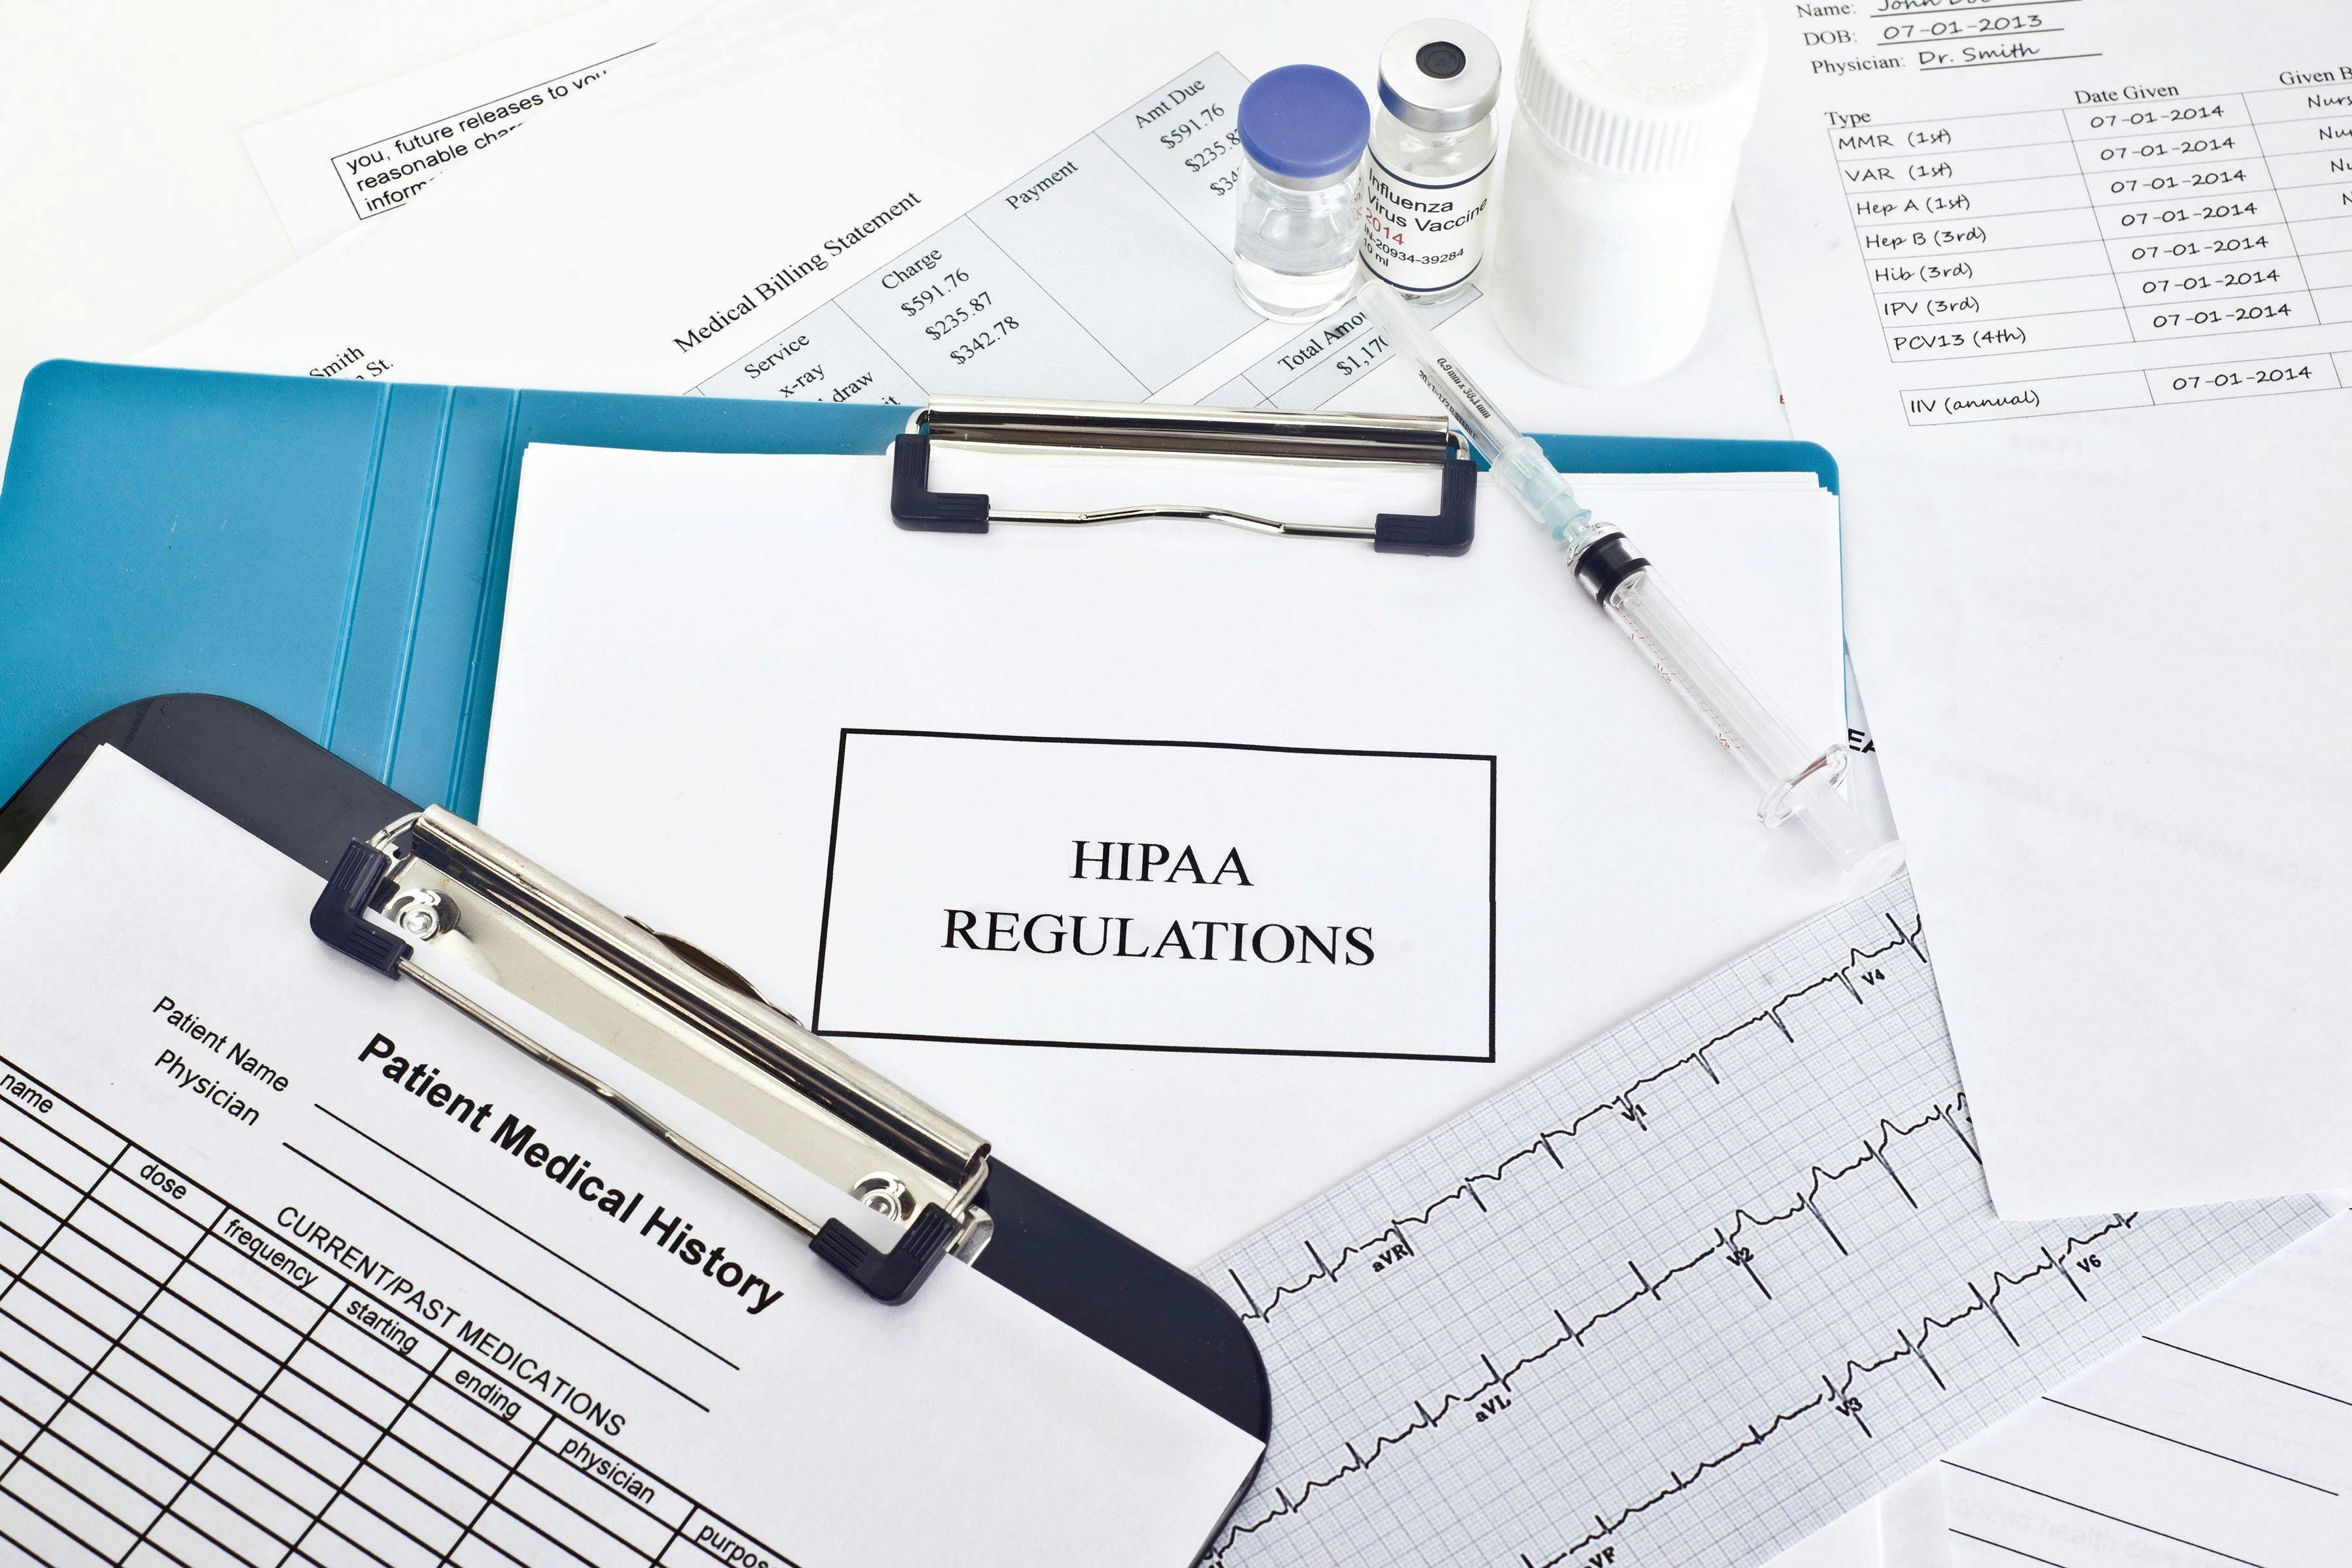 An Expert's View on HIPAA